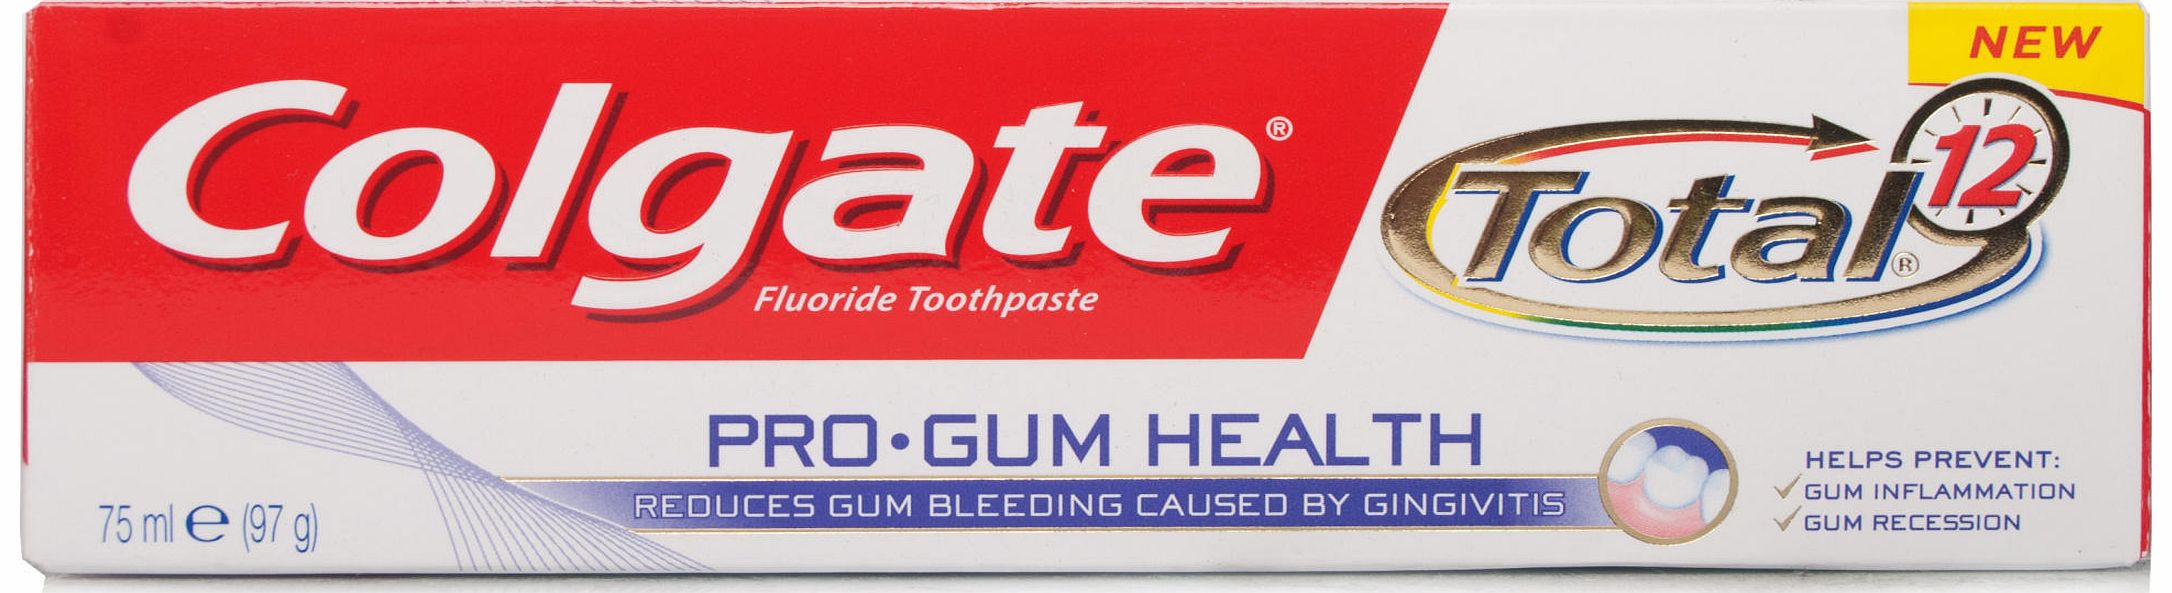 Colgate Total Pro Gum Health Toothpaste